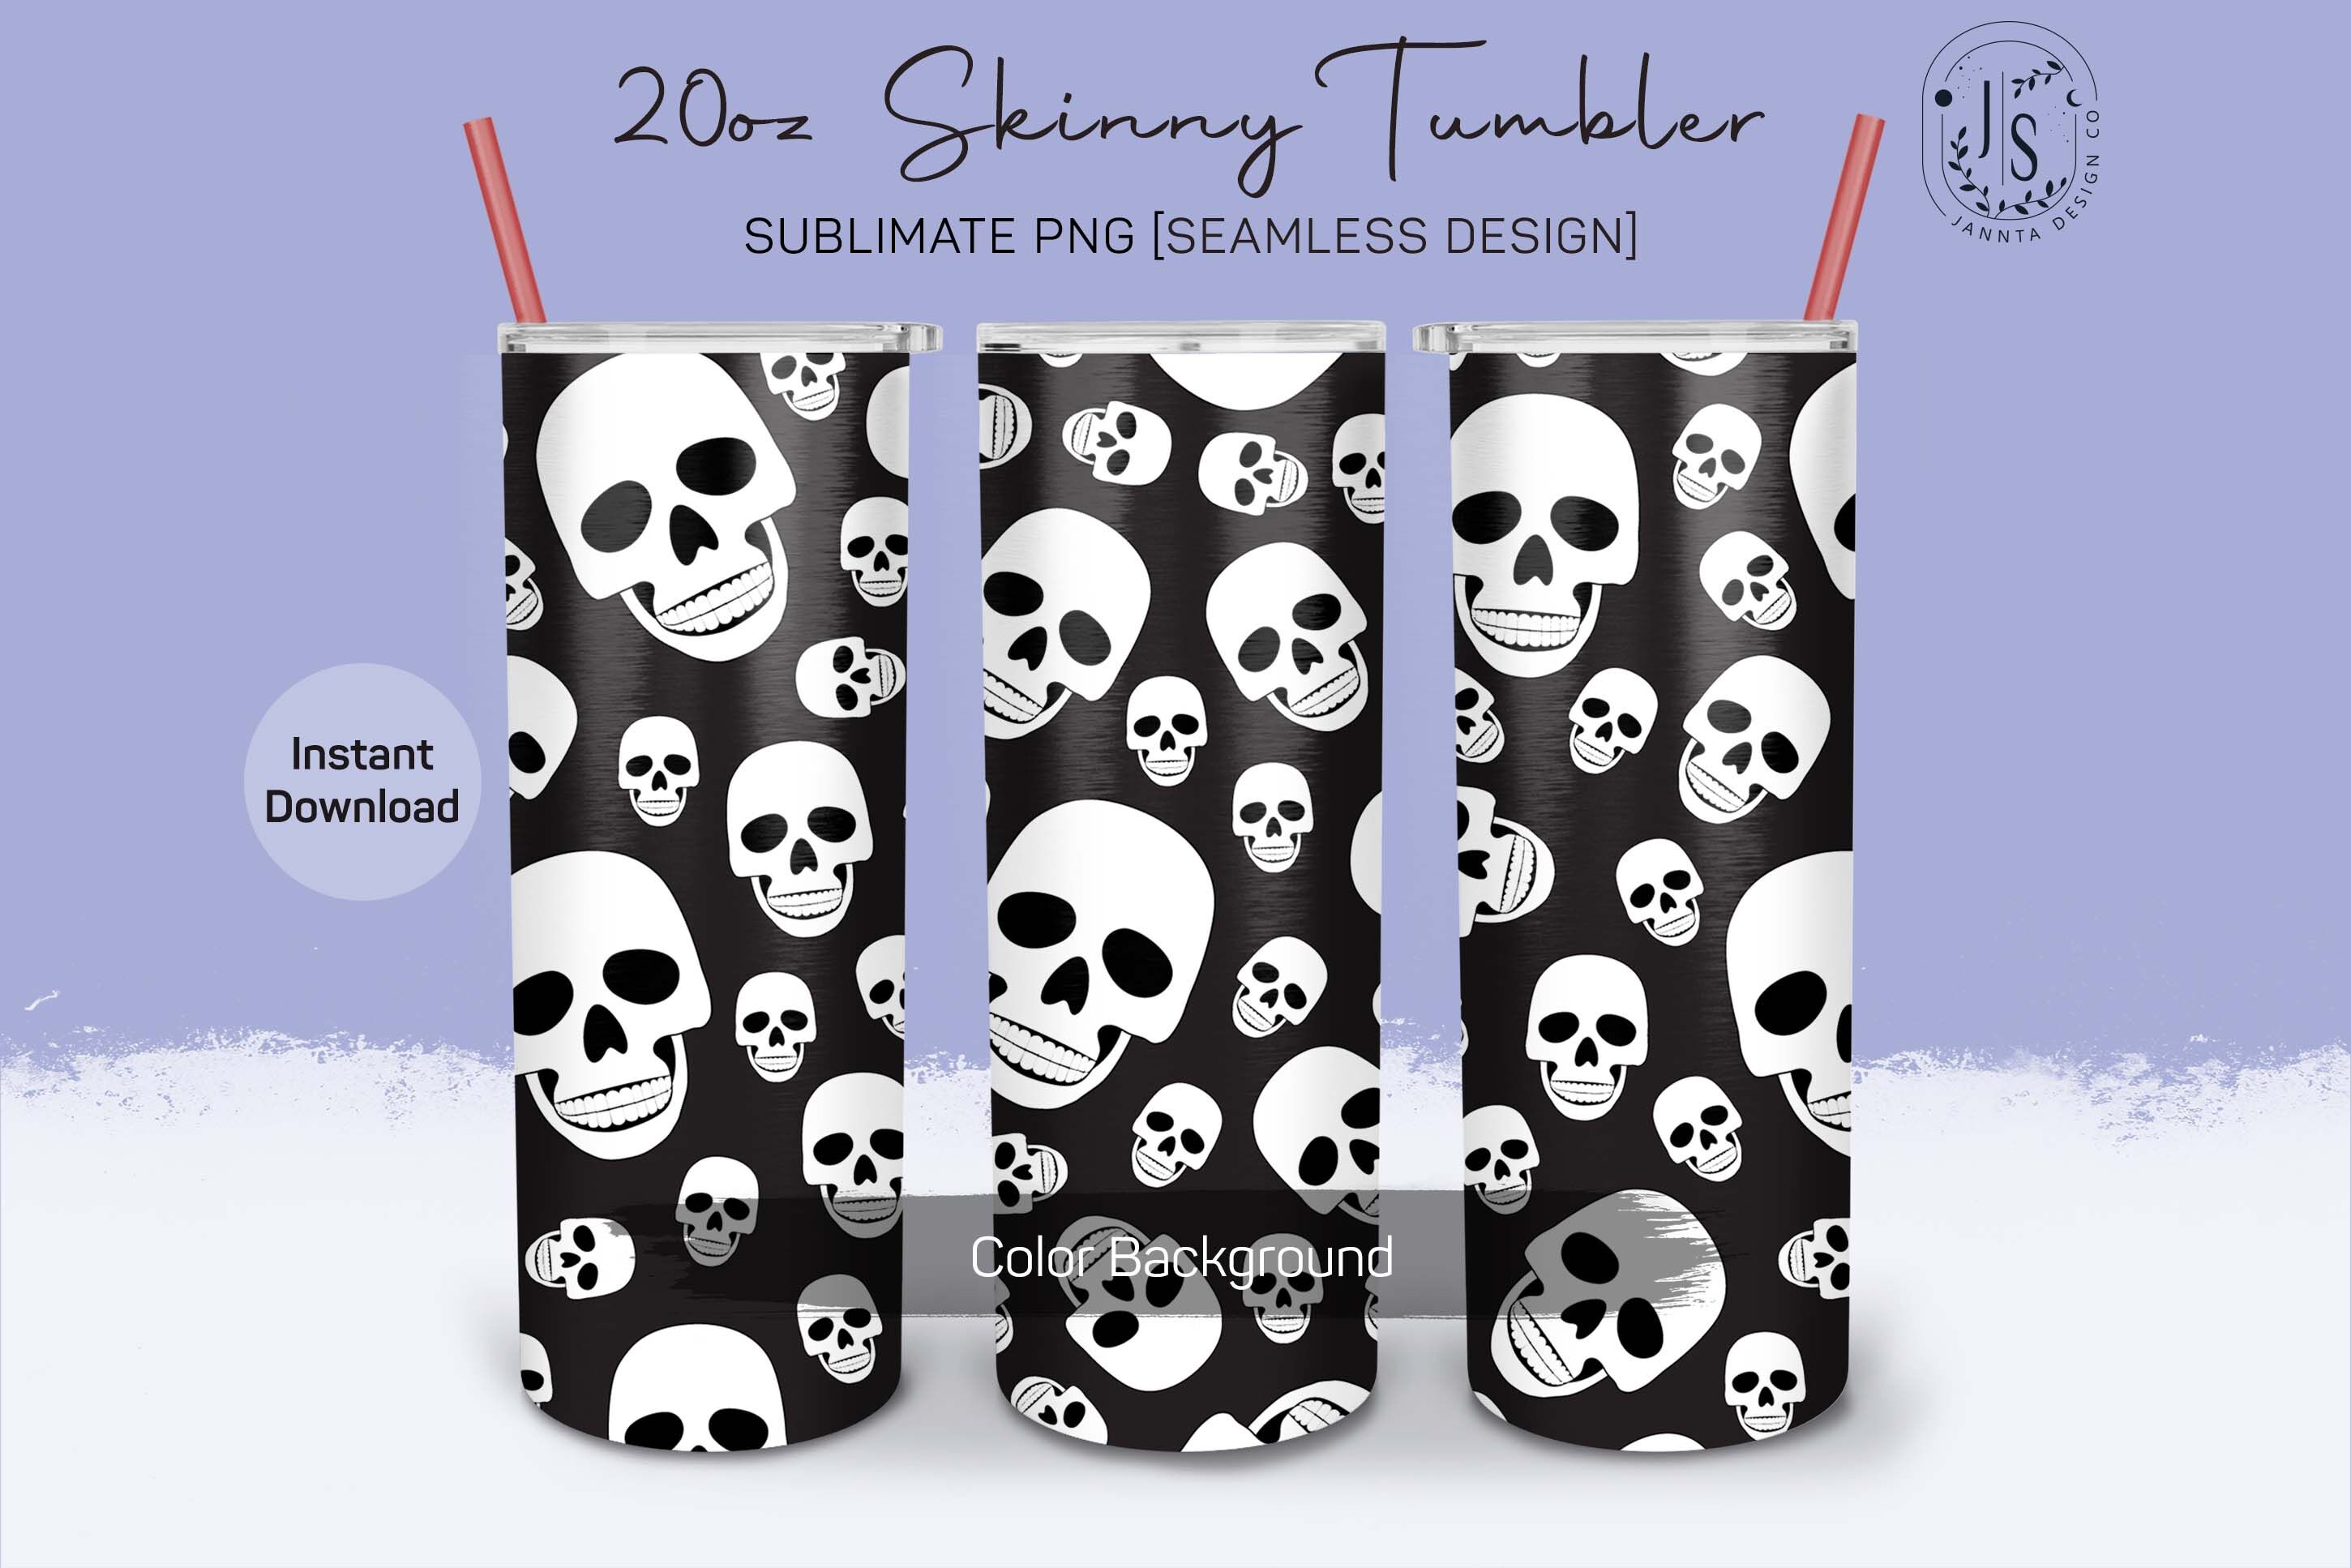 250 Horror Tumbler Wraps for 20 oz Sublimation Tumbler Bundl - Inspire  Uplift